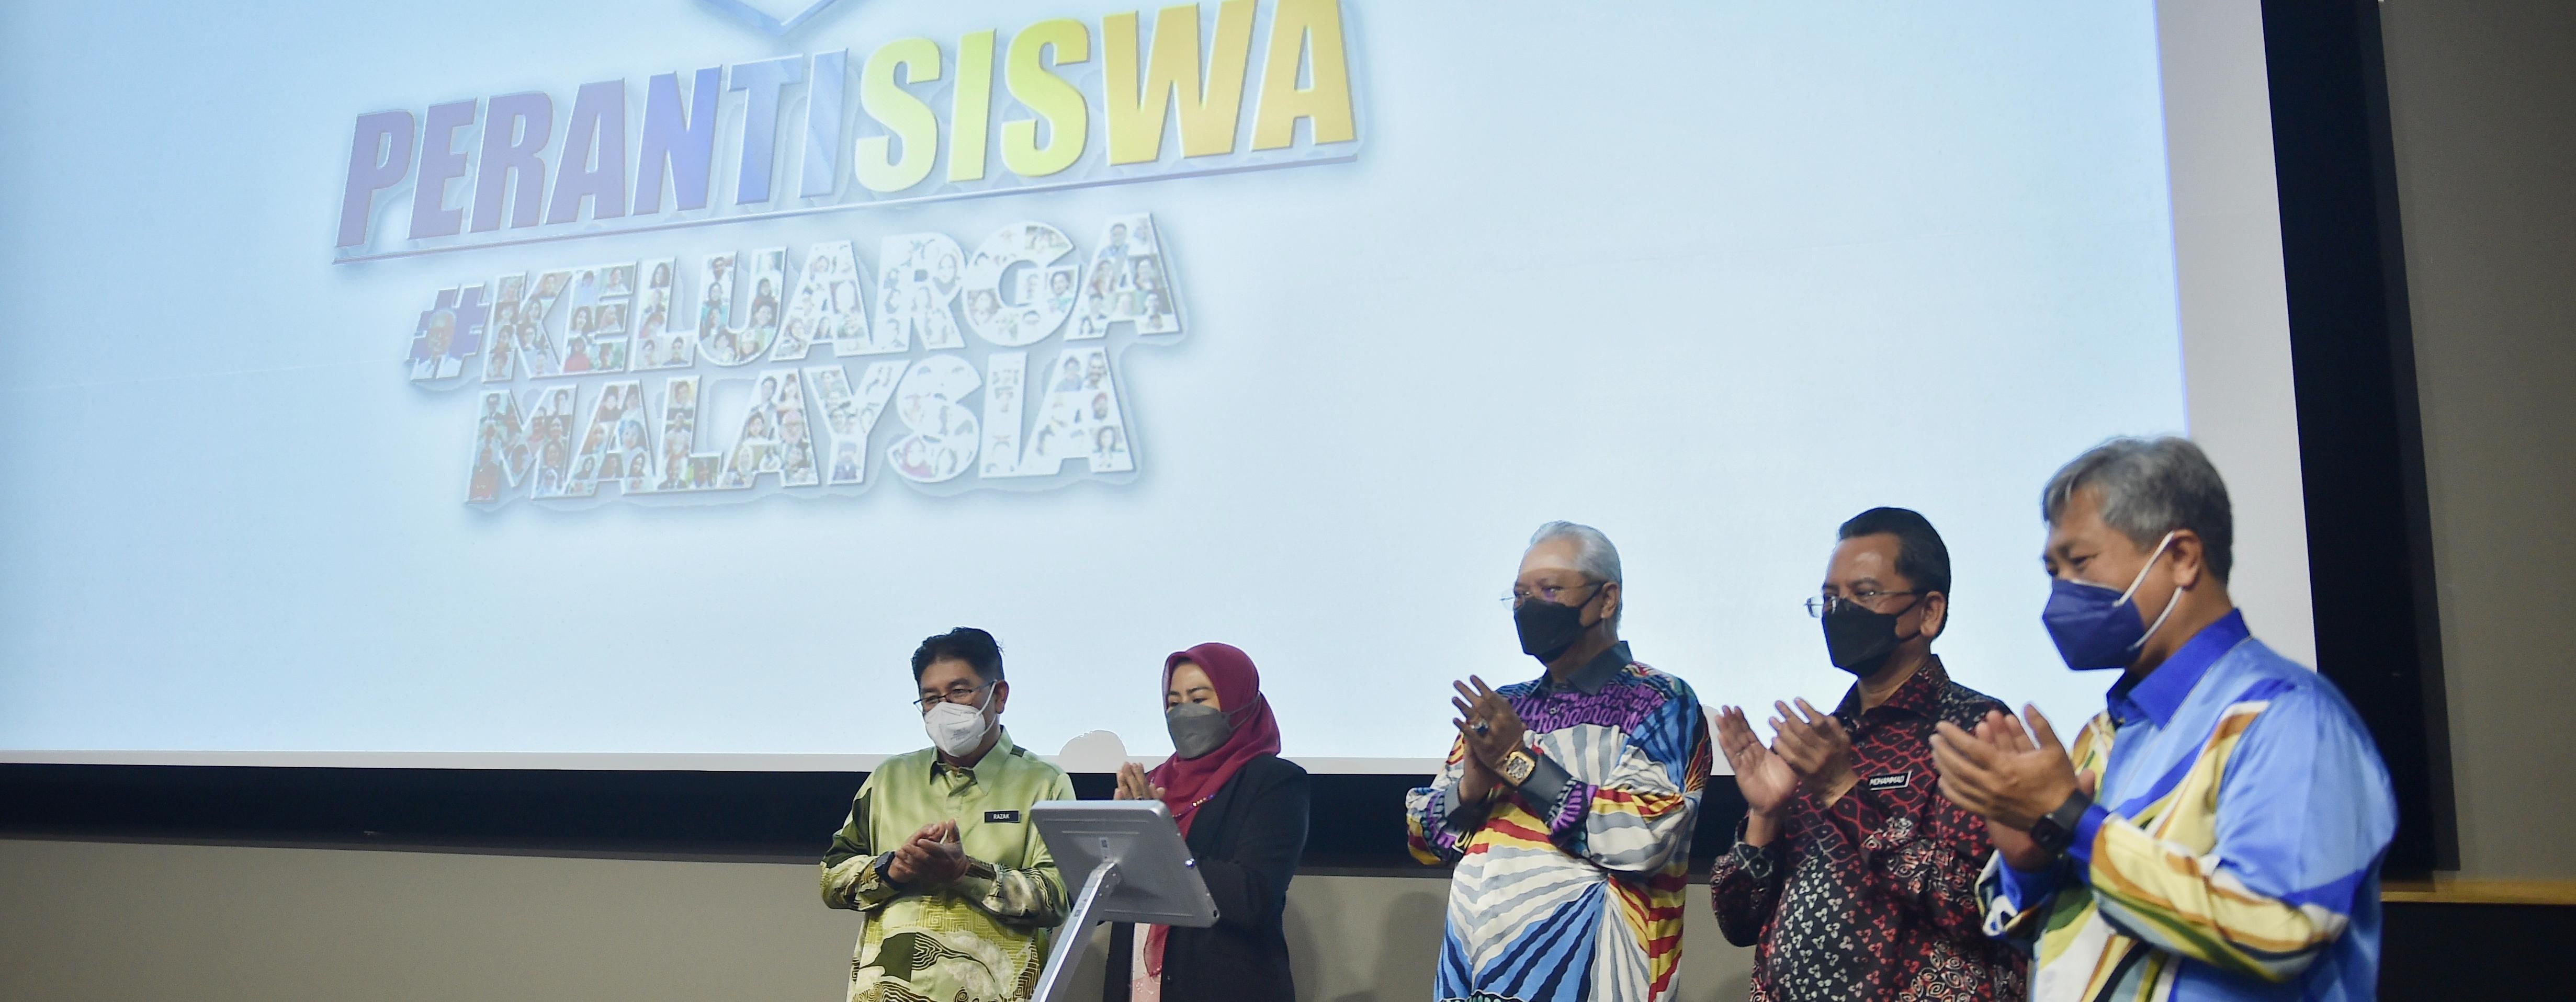 Majlis PraPelancaran PerantiSiswa Keluarga Malaysia